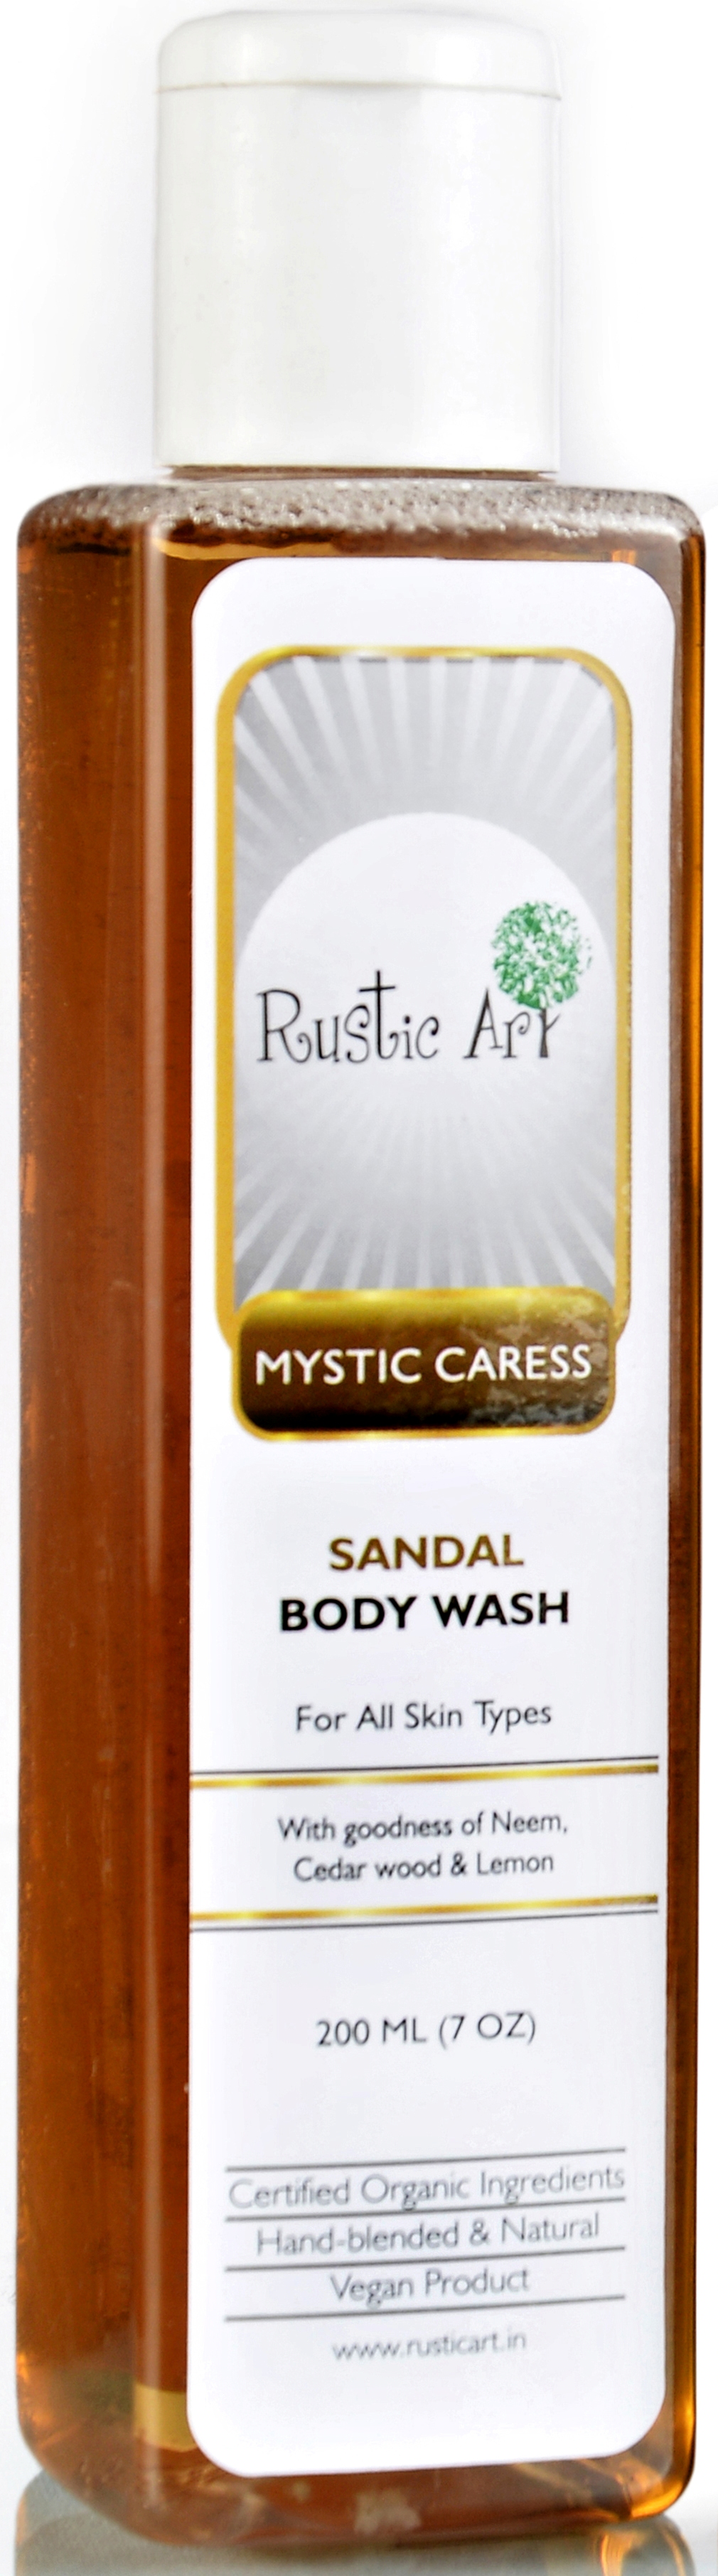 Buy Rustic Art Organic Sandal Body Wash at Best Price Online